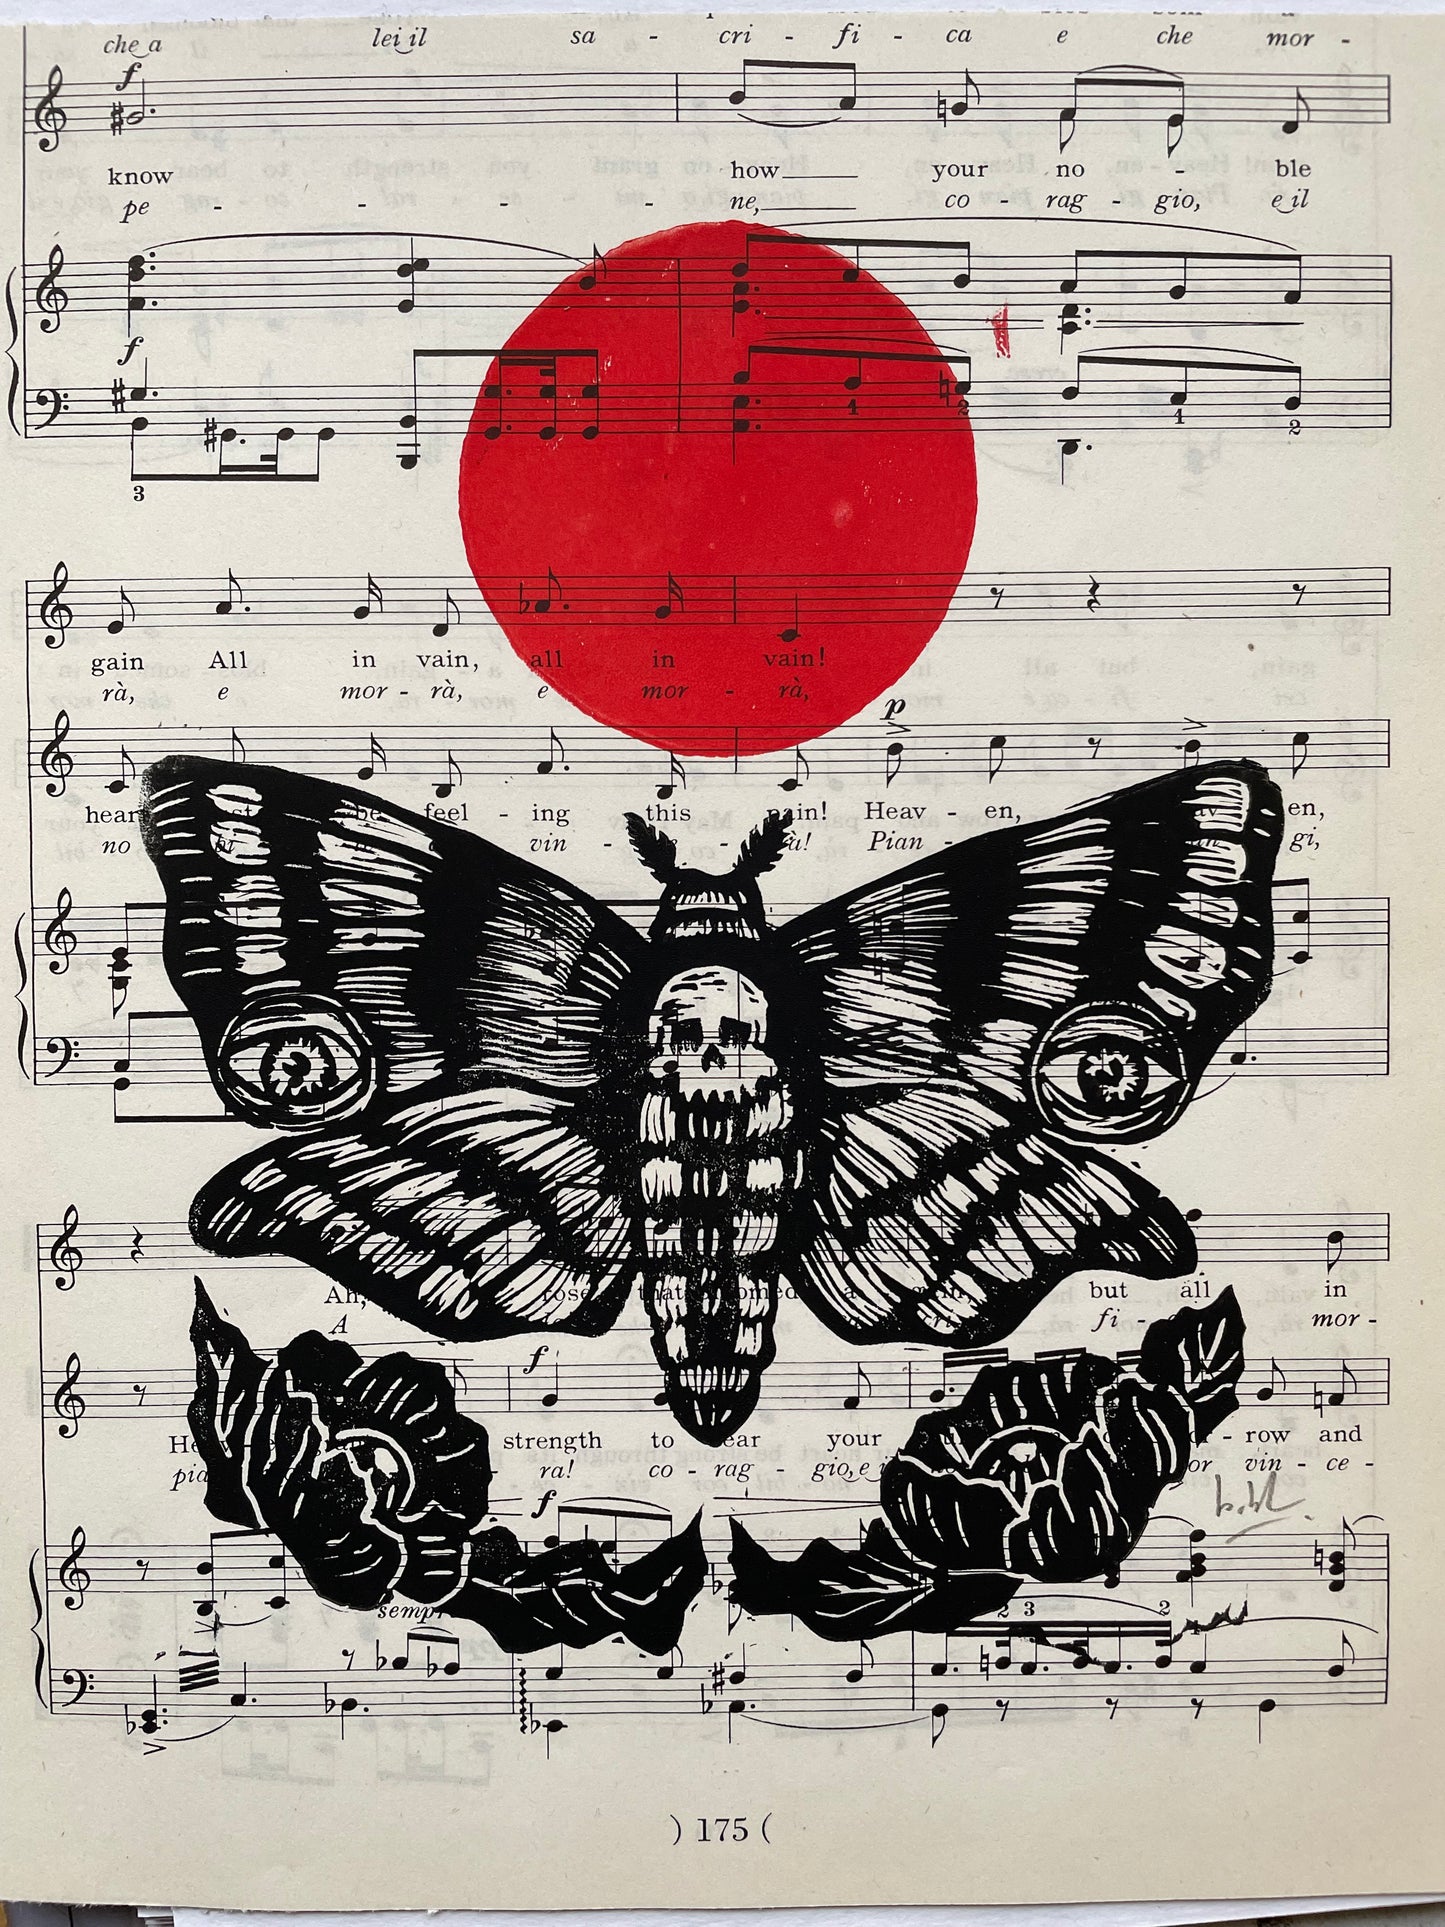 New Moon Moth Linocut Block Print 8x10